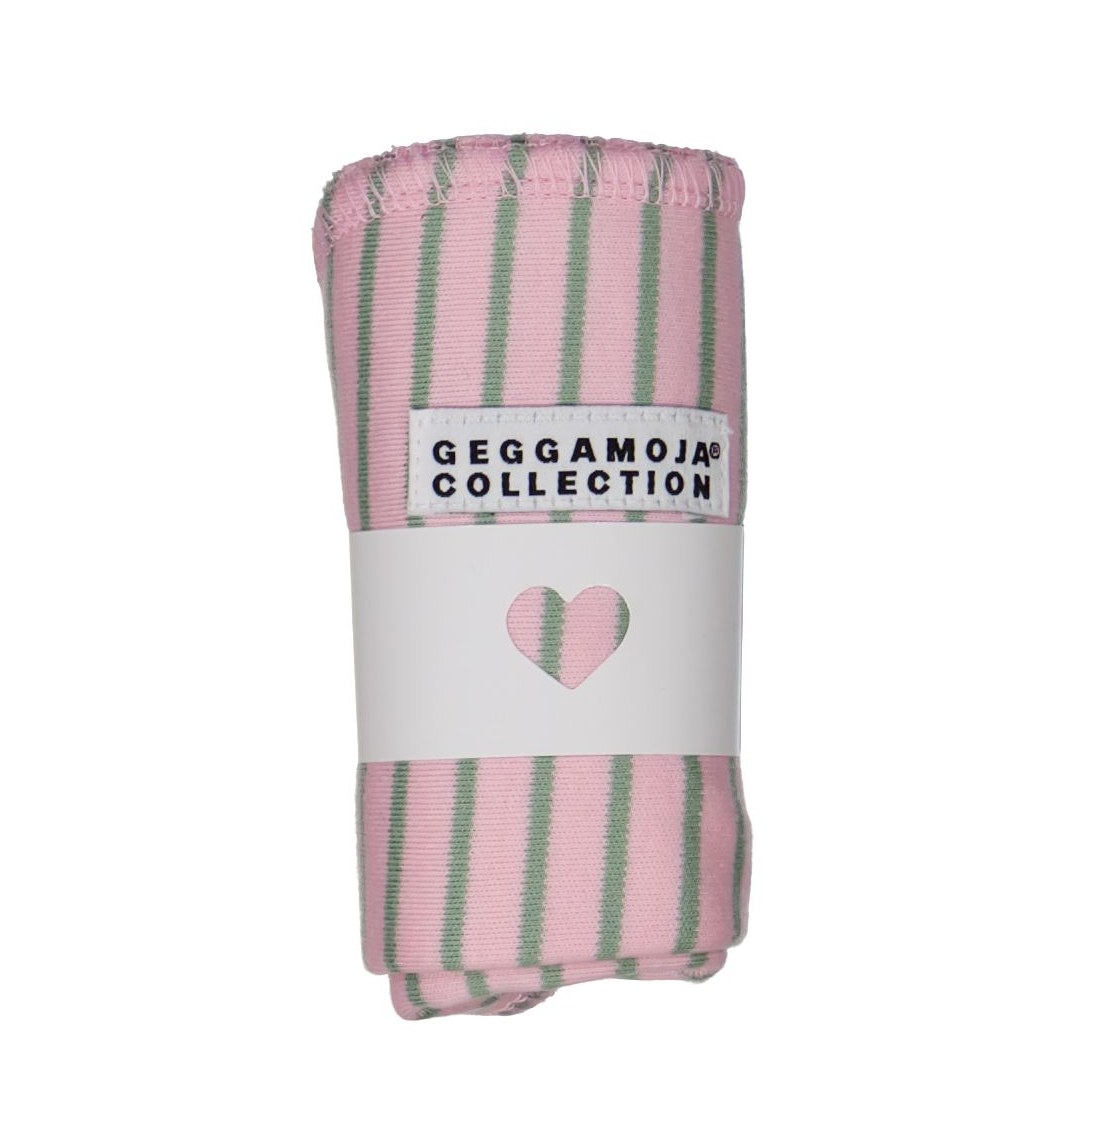 Cuddly blanket Candy pink str  One Size